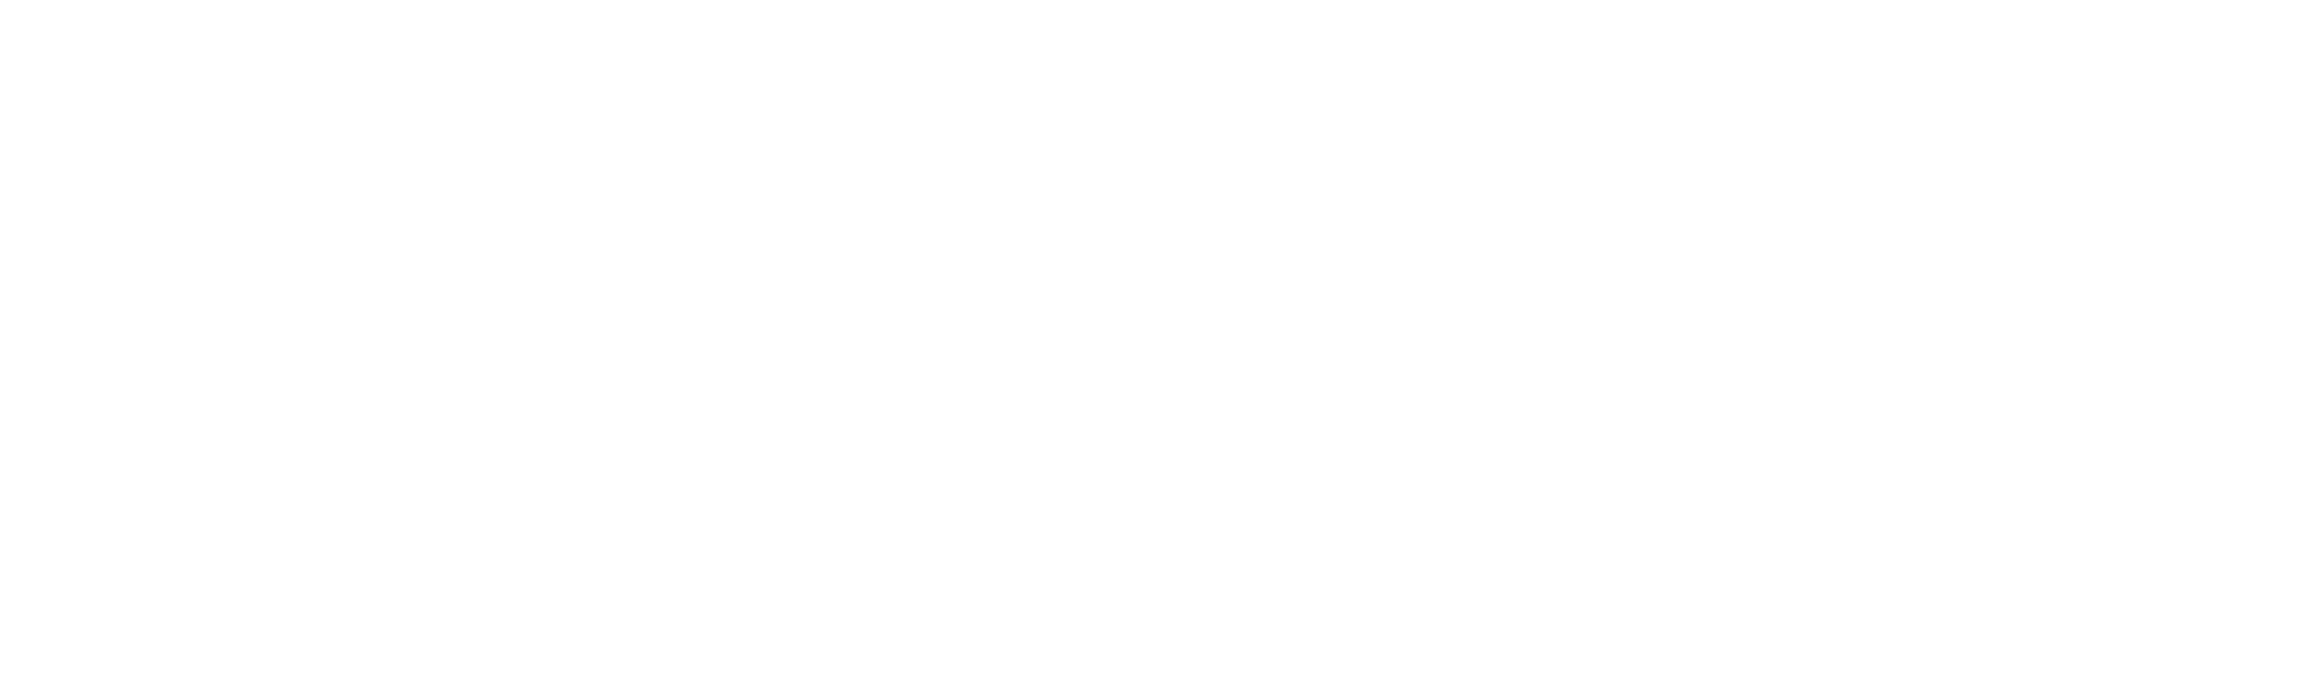 AD SAUNA BOX